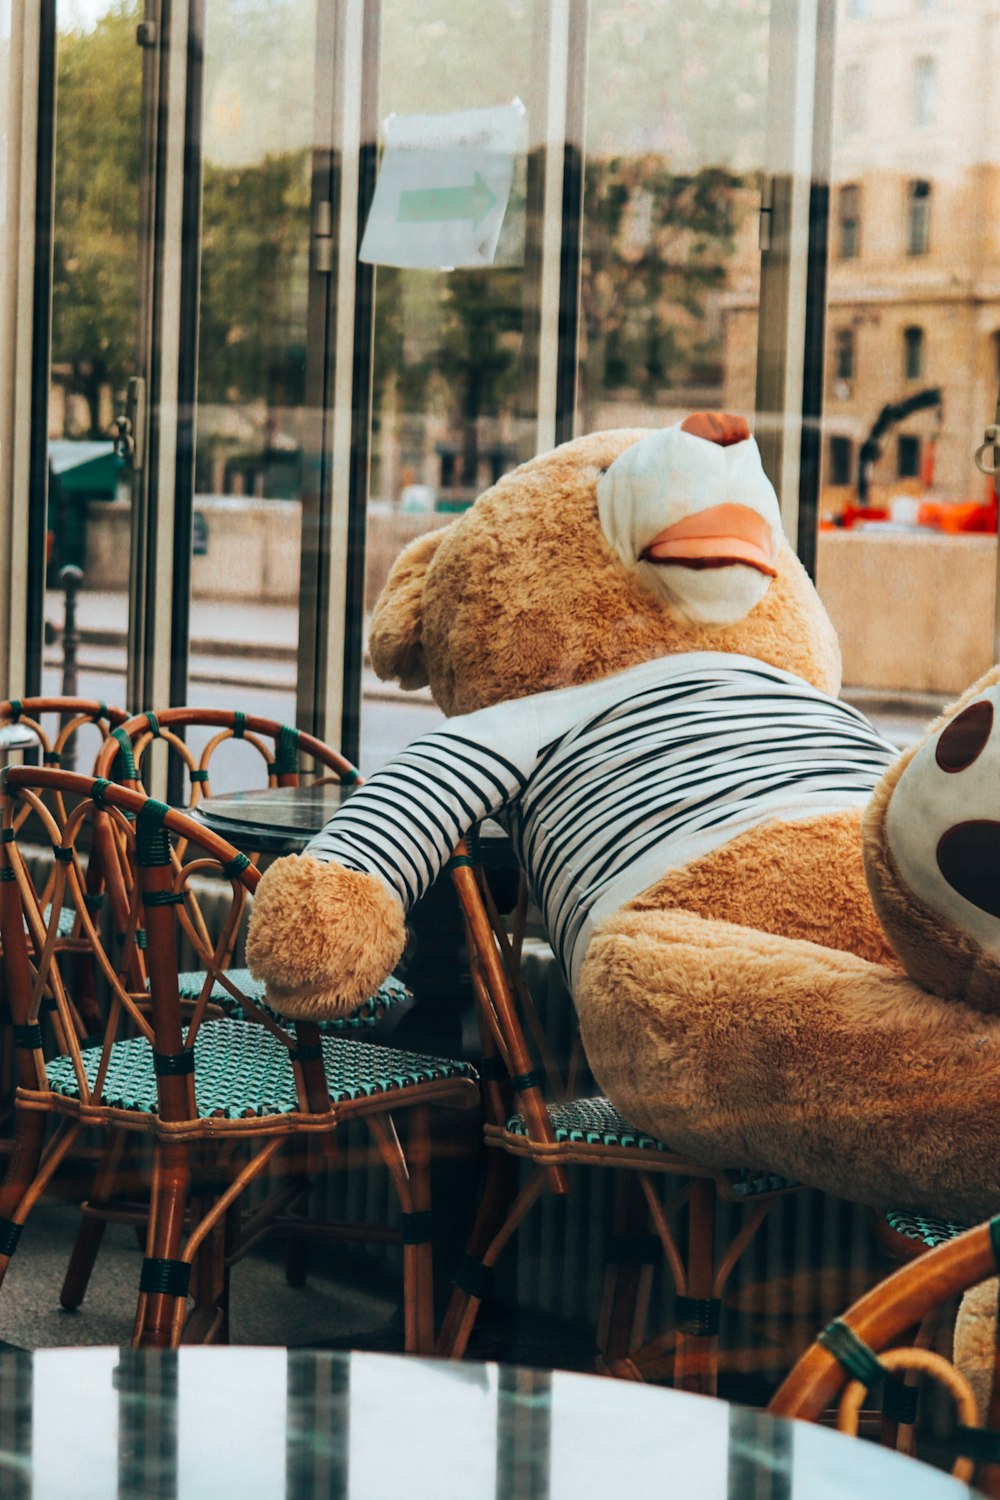 a teddy bear sitting on a chair in a cafe